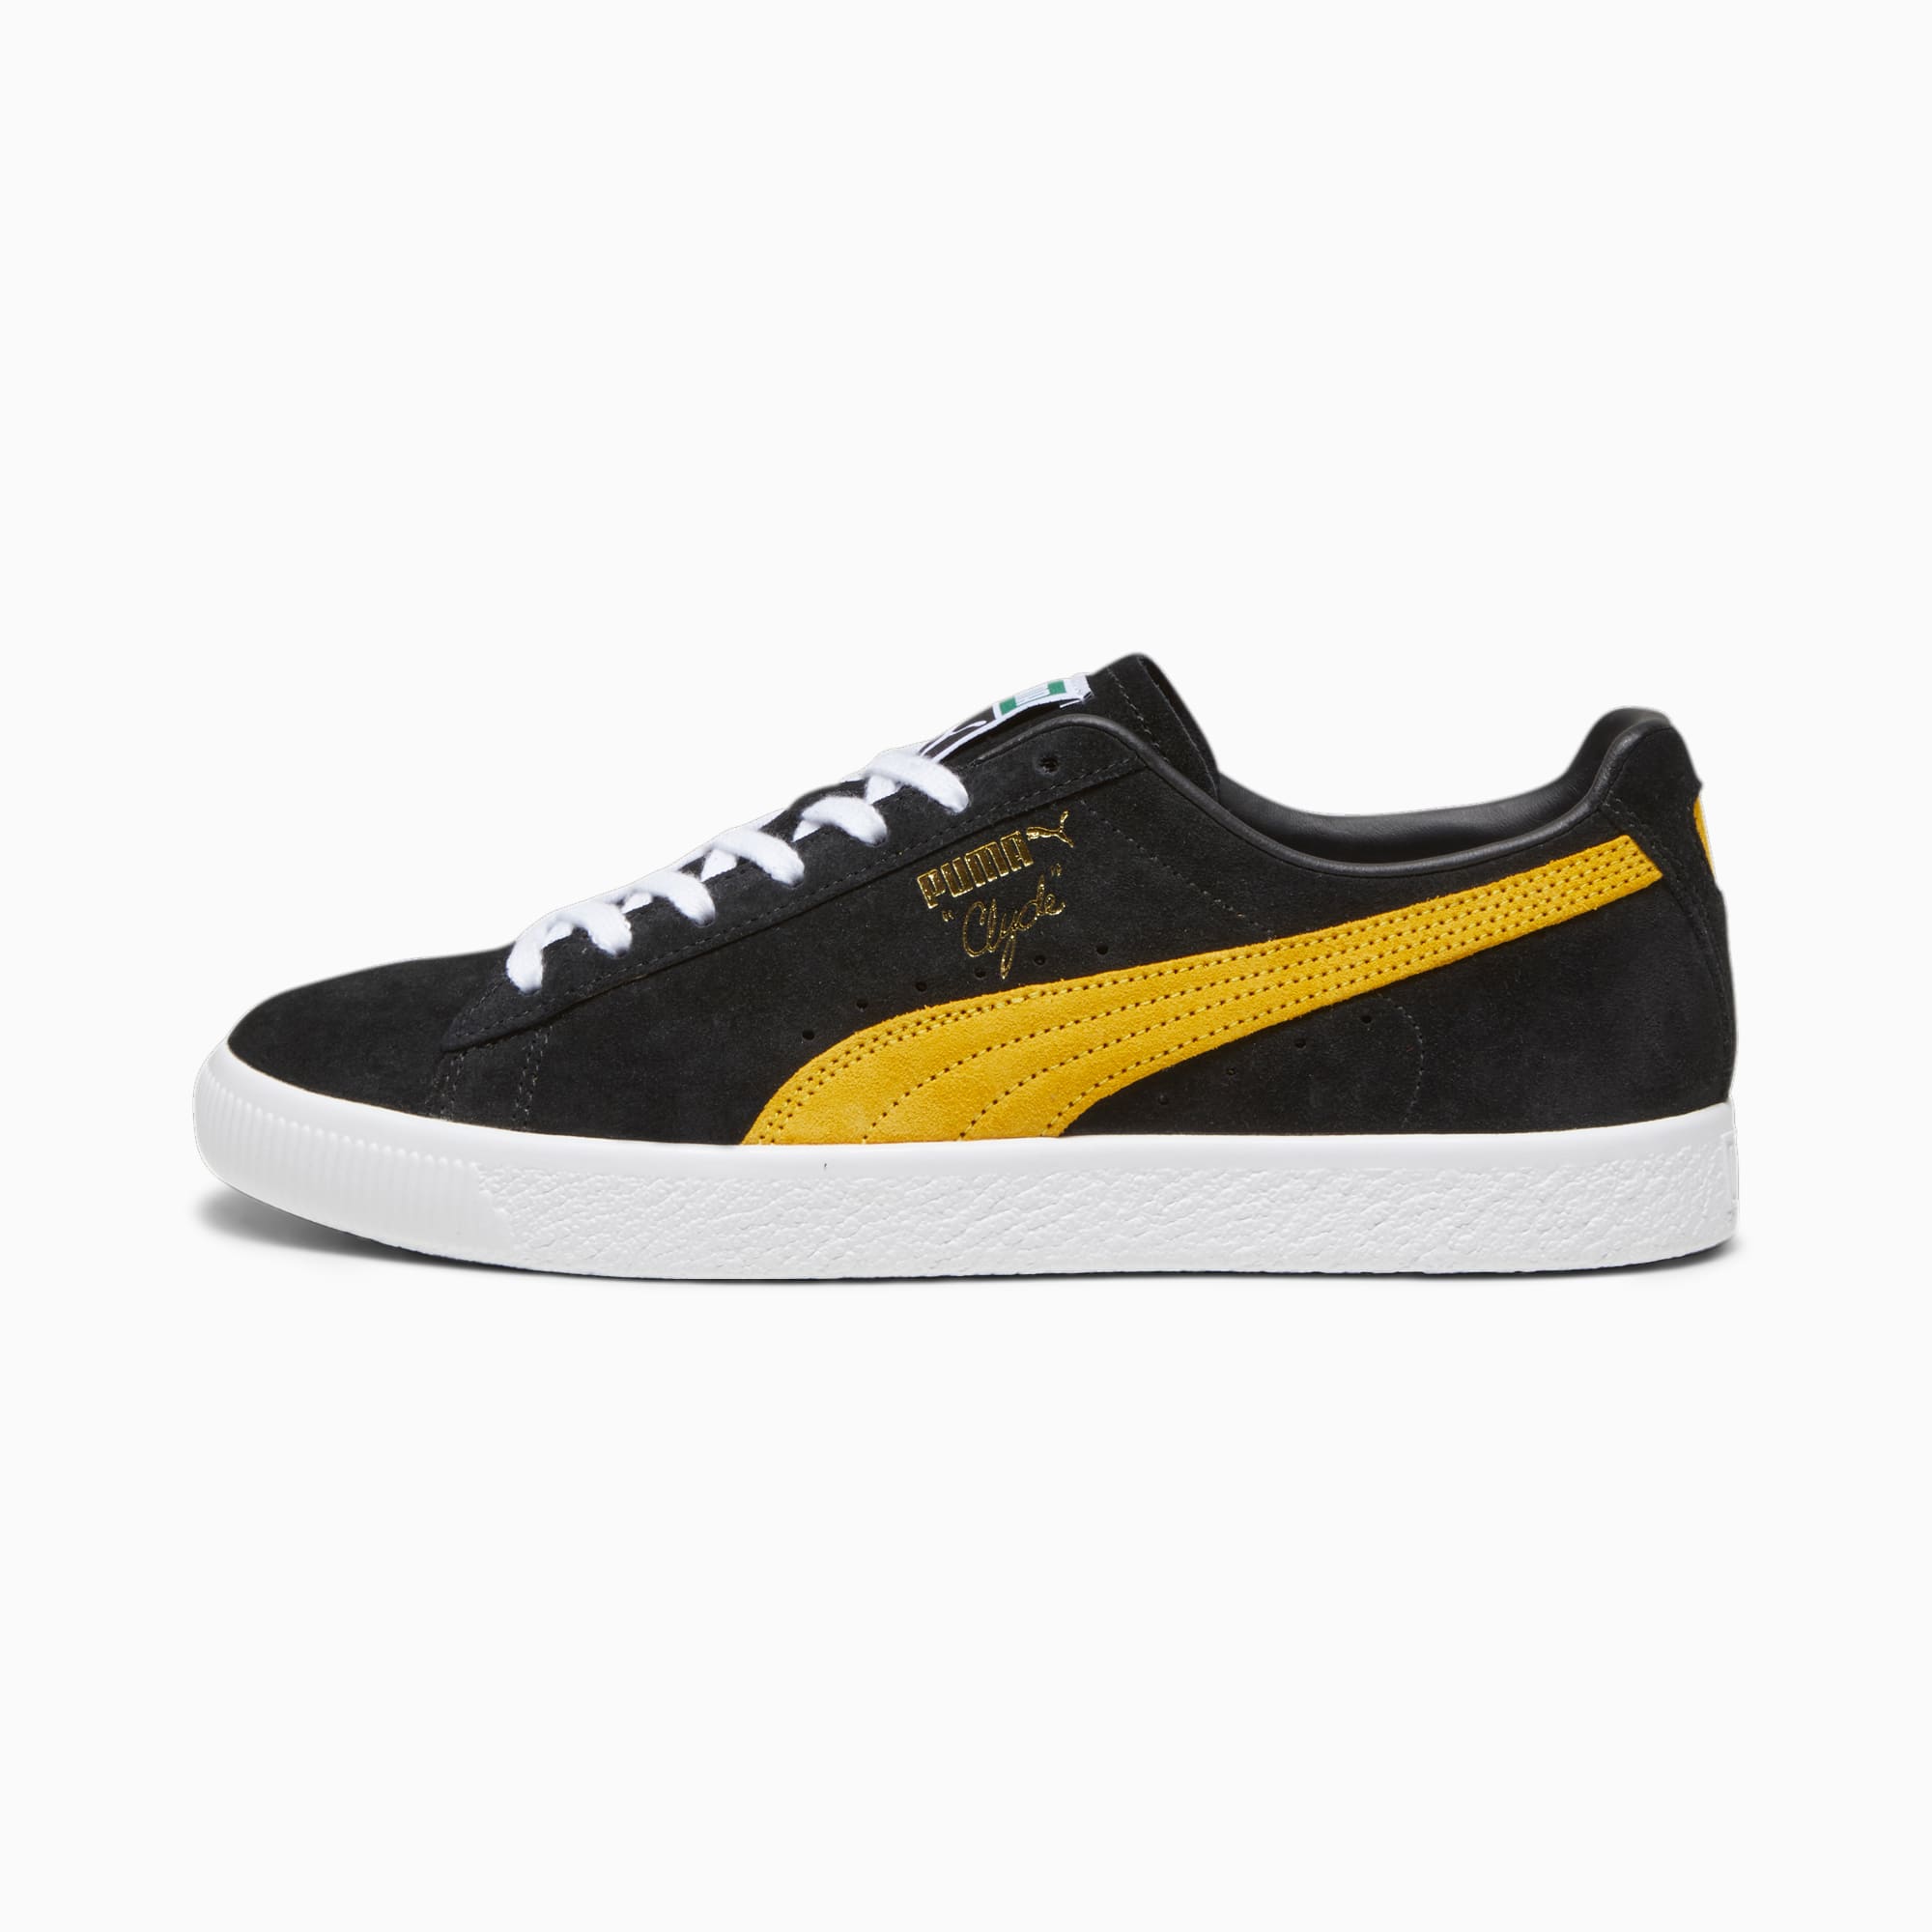 Clyde OG Sneakers | PUMA Black-Yellow Sizzle | PUMA Shop All Puma | PUMA